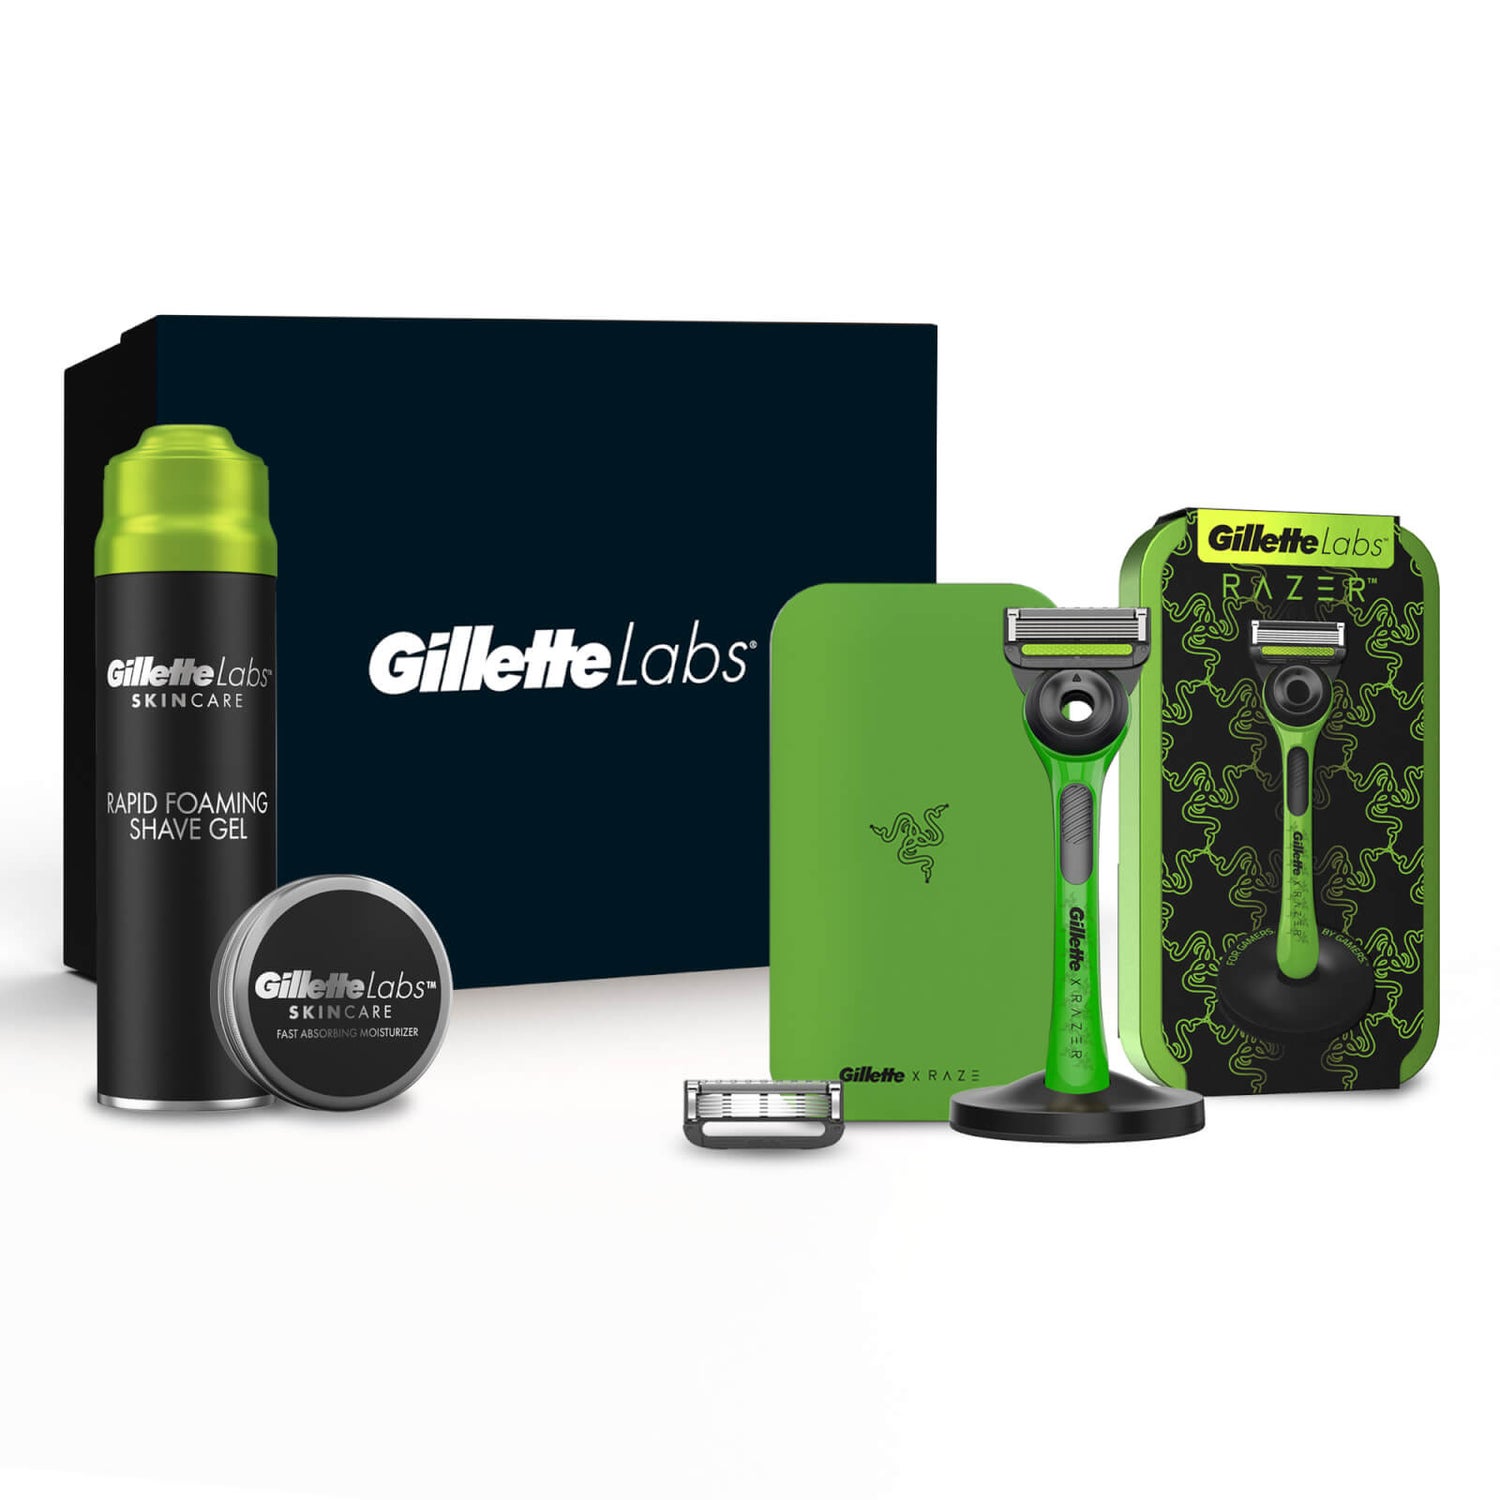 Gillette Labs Razer Razor Travel Kit Giftset